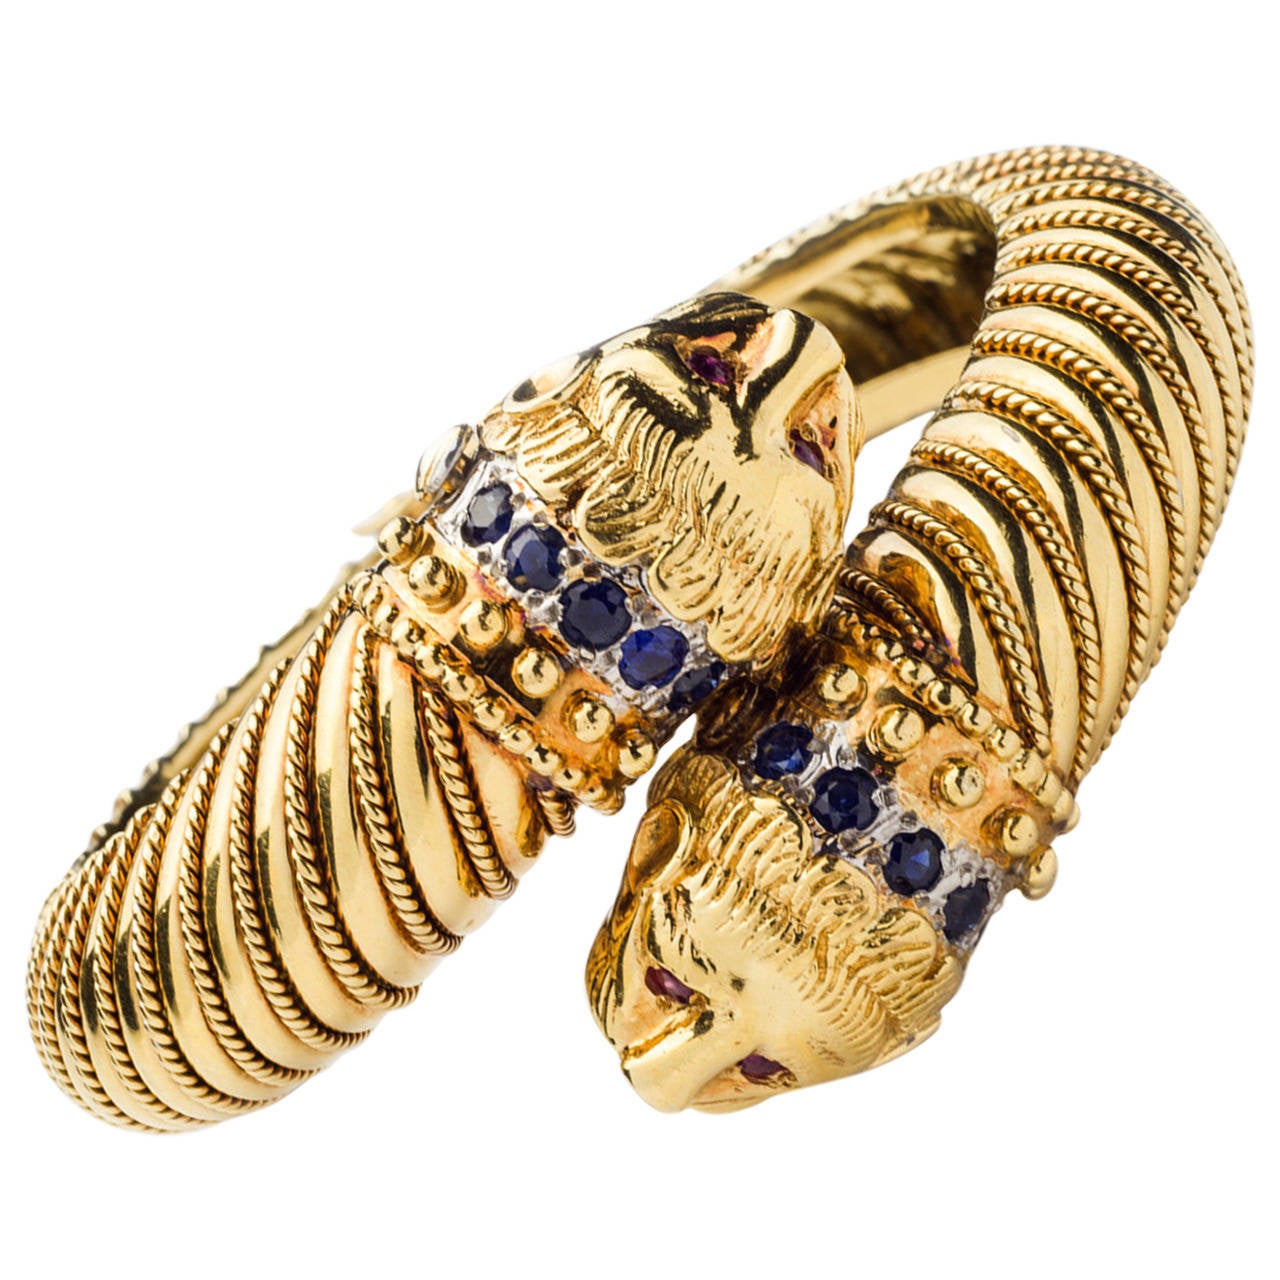 Zolotas Ruby Sapphire Gold Chimera Cuff Bracelet